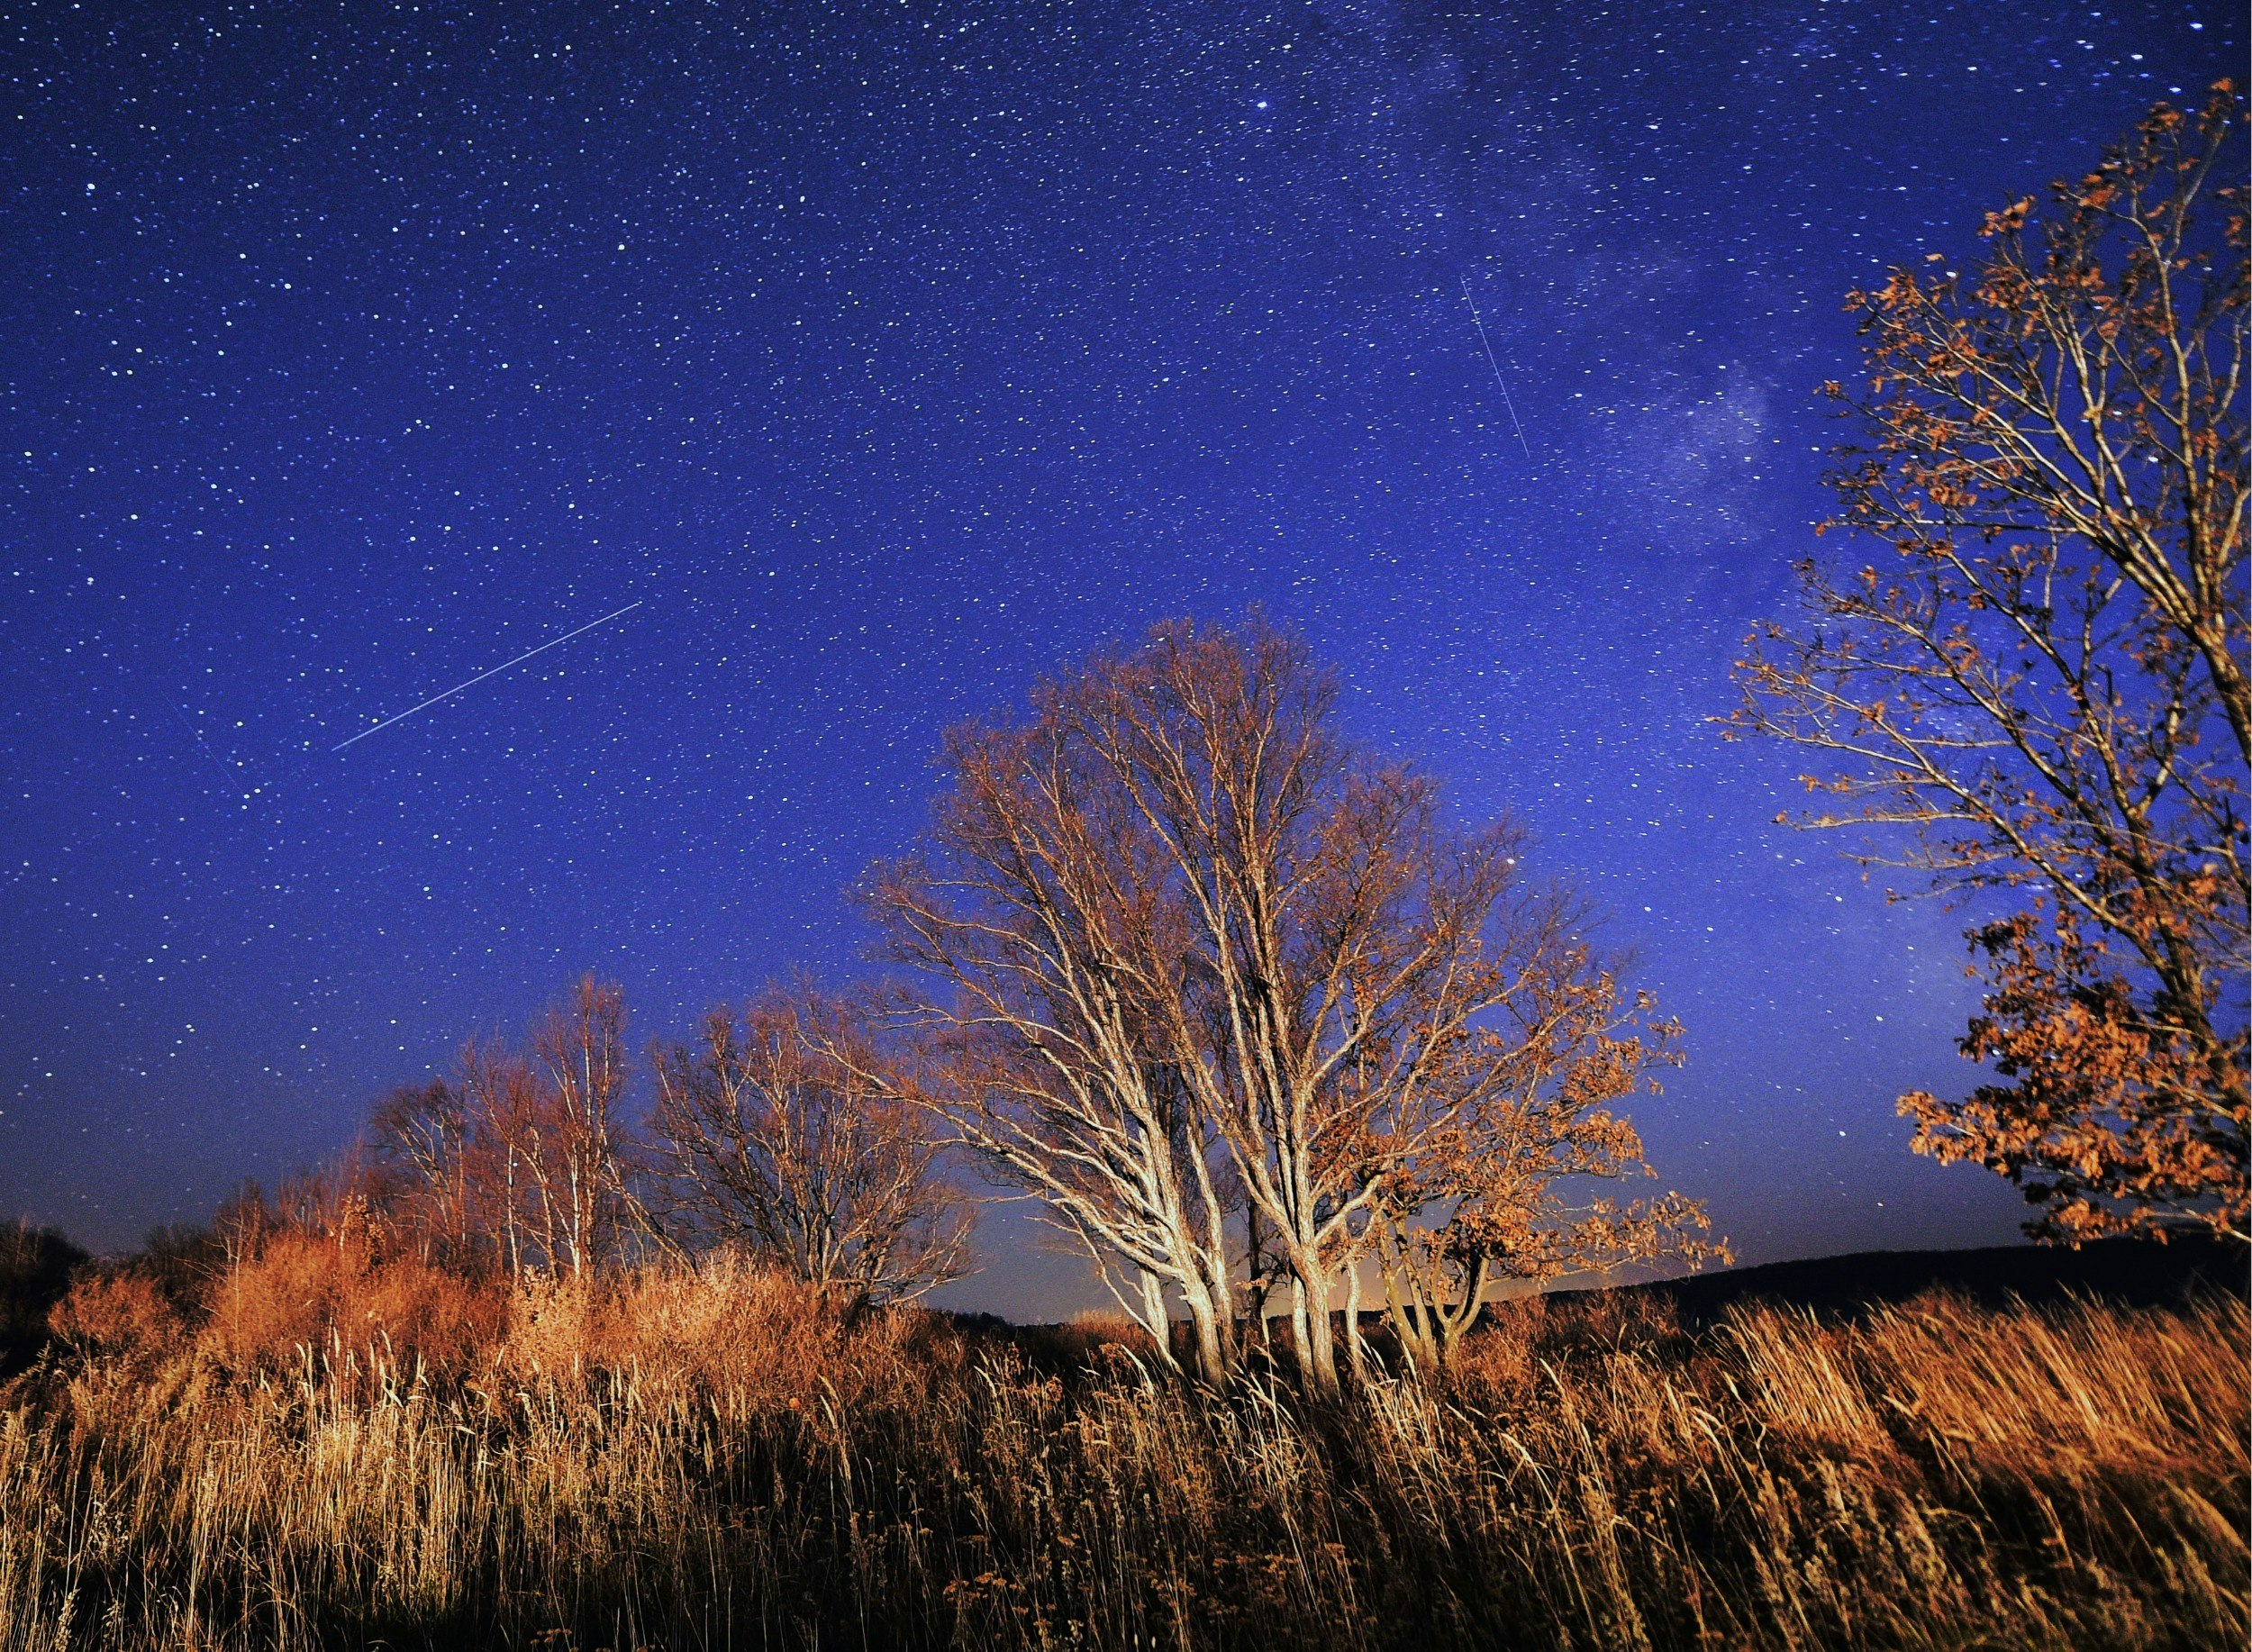 Meteors streak across the night sky during the Orionid meteor shower